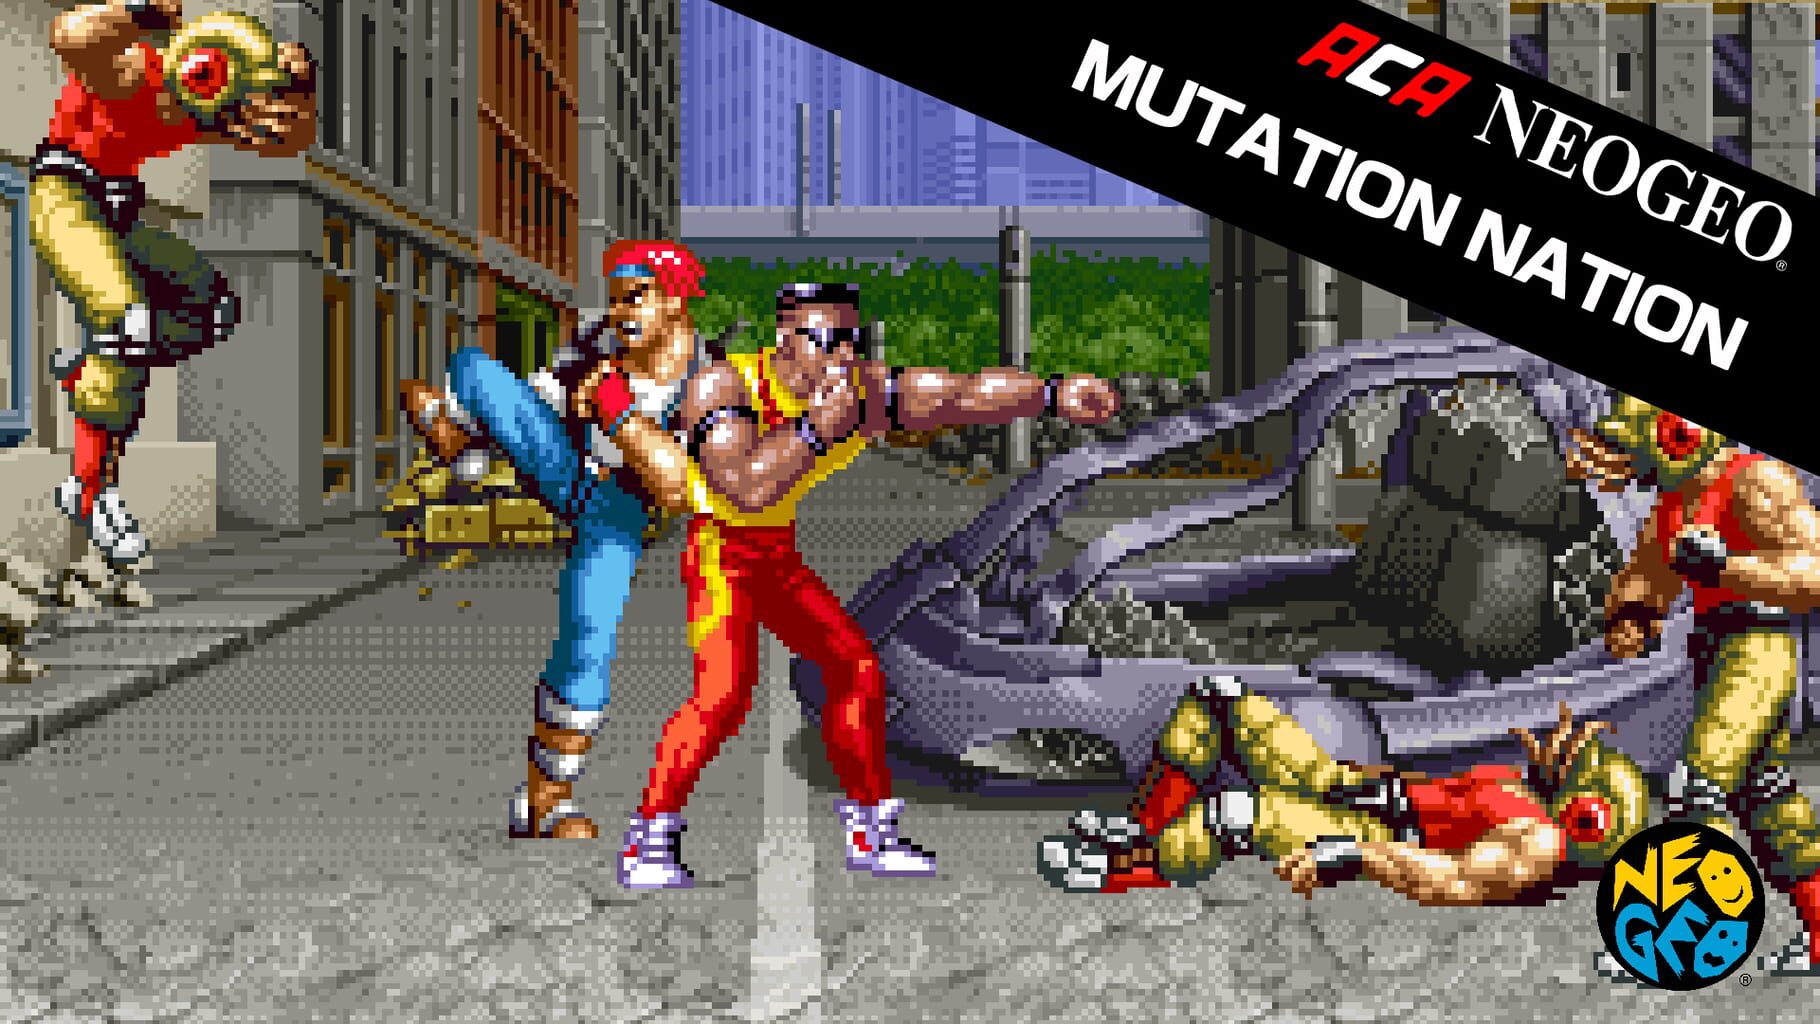 ACA Neo Geo: Mutation Nation artwork